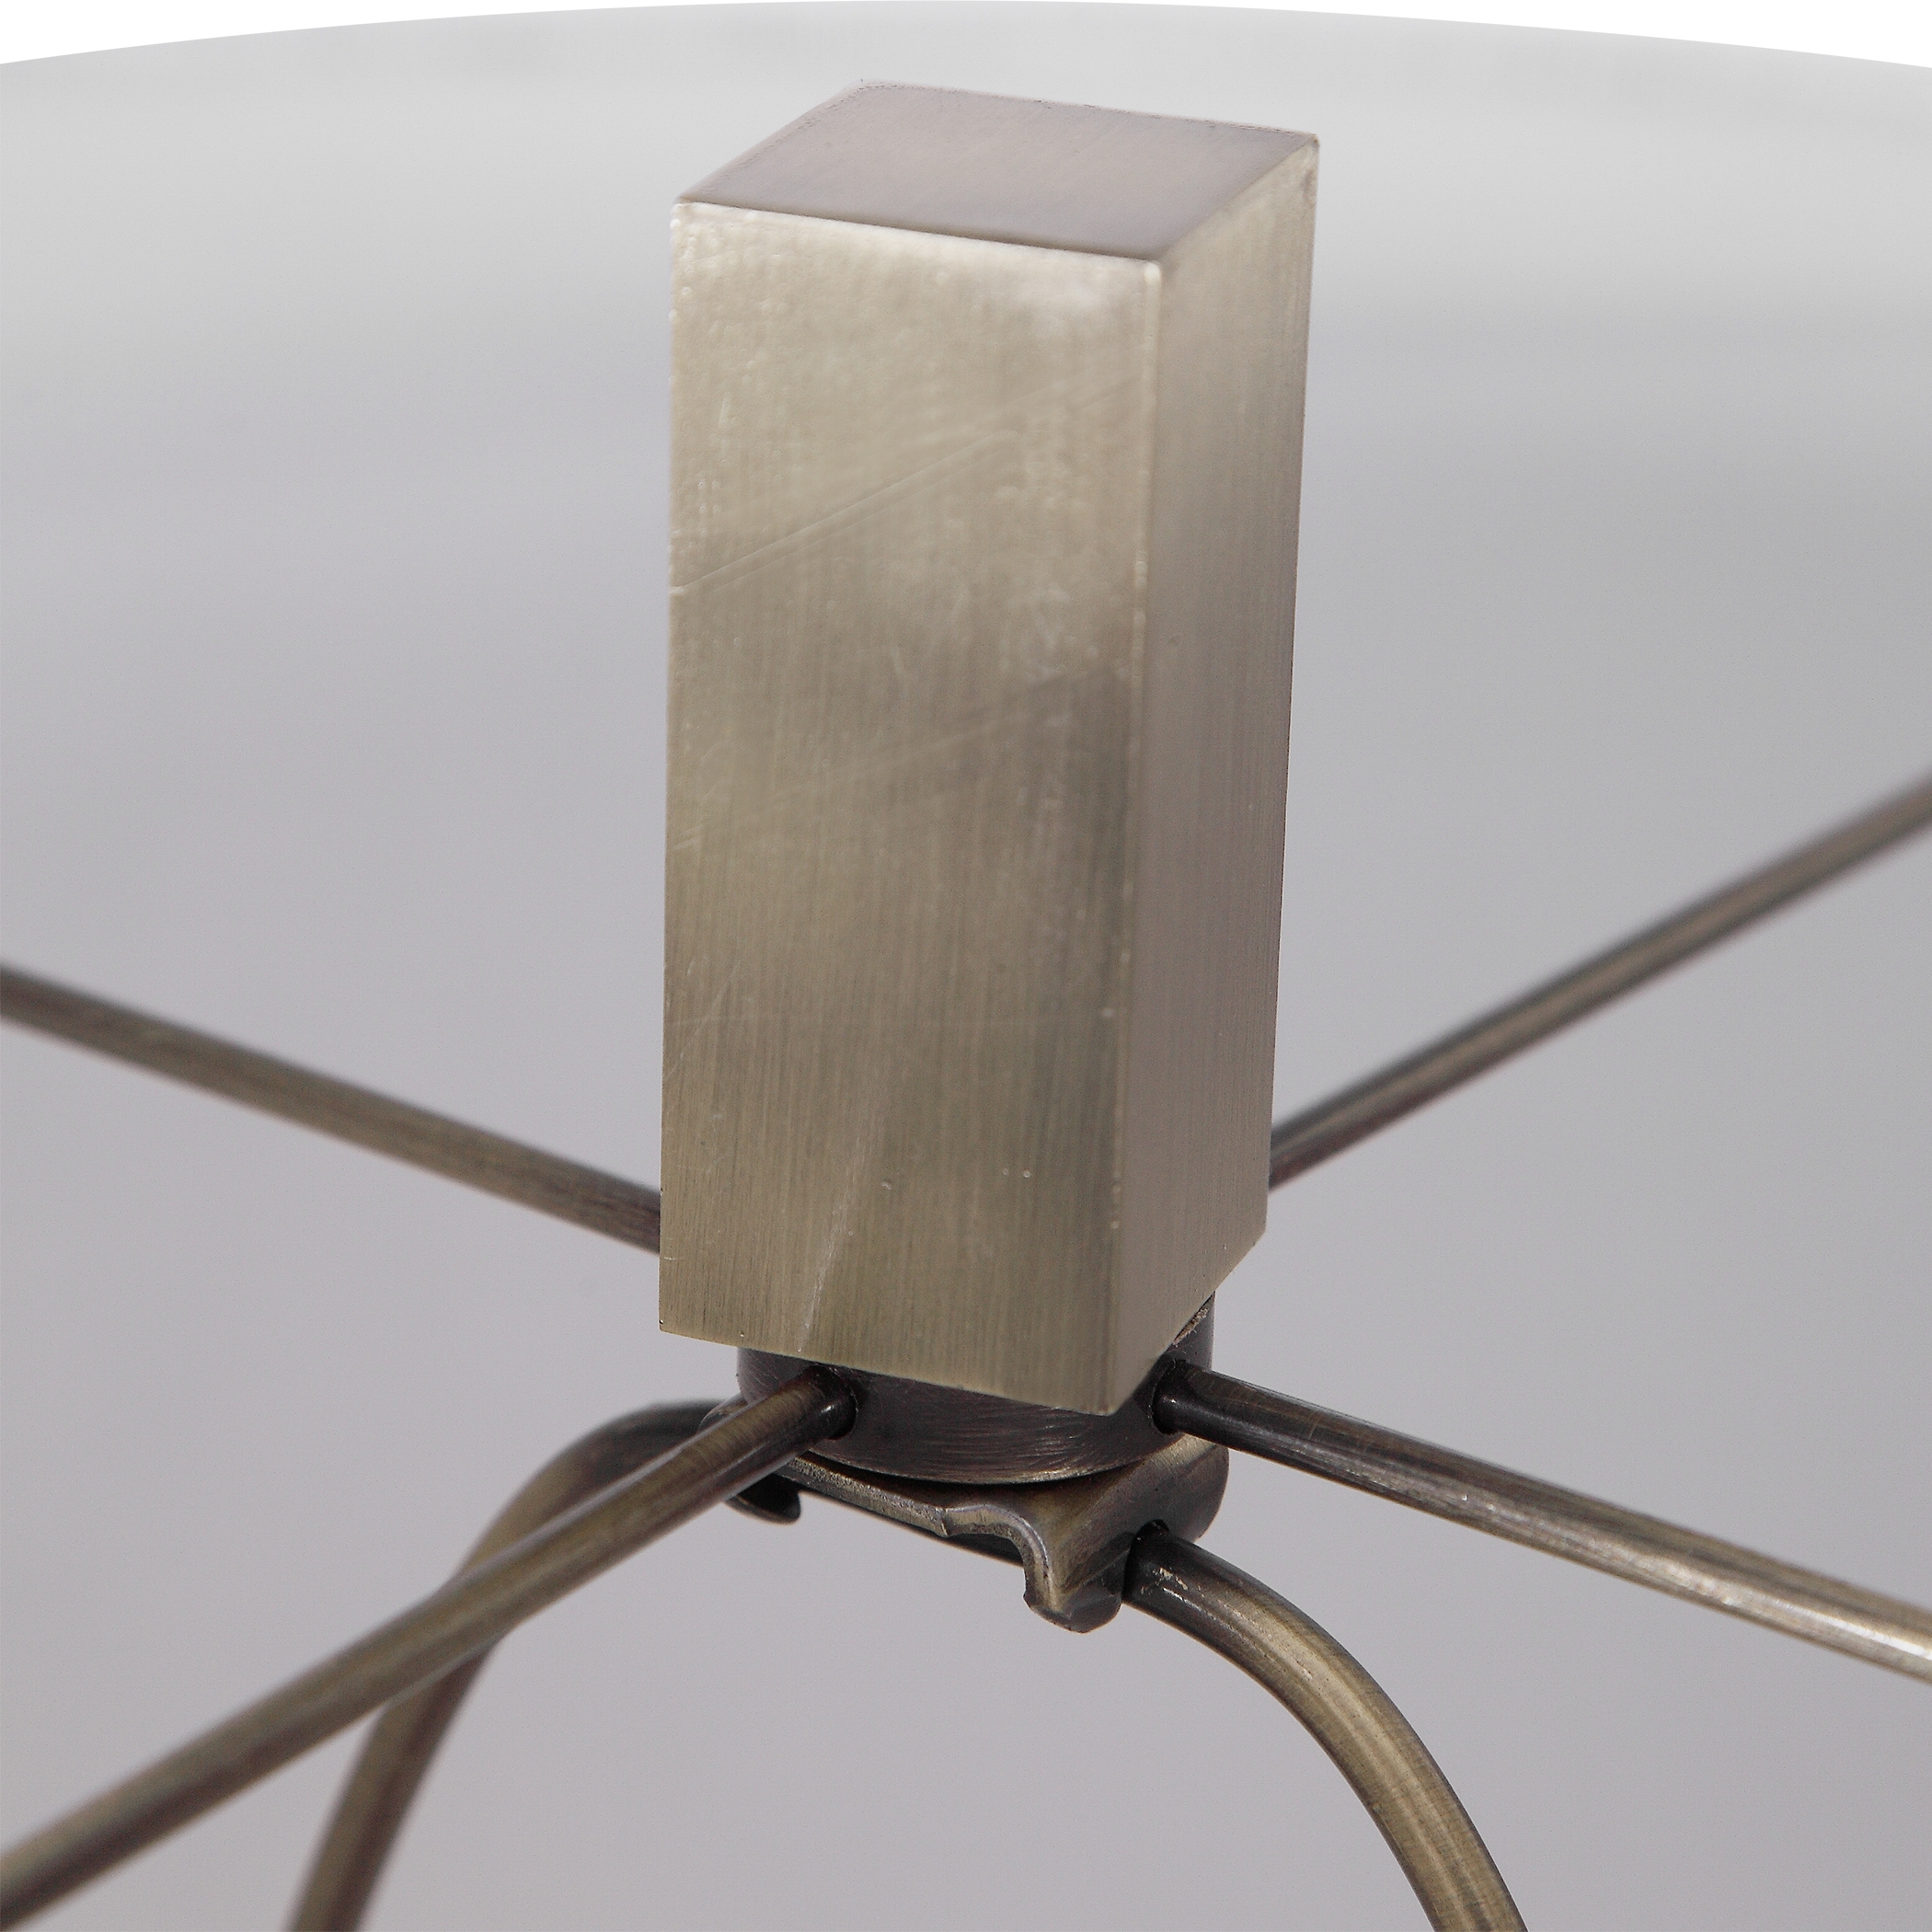 Zade Warm Gray Table Lamp - Image 1